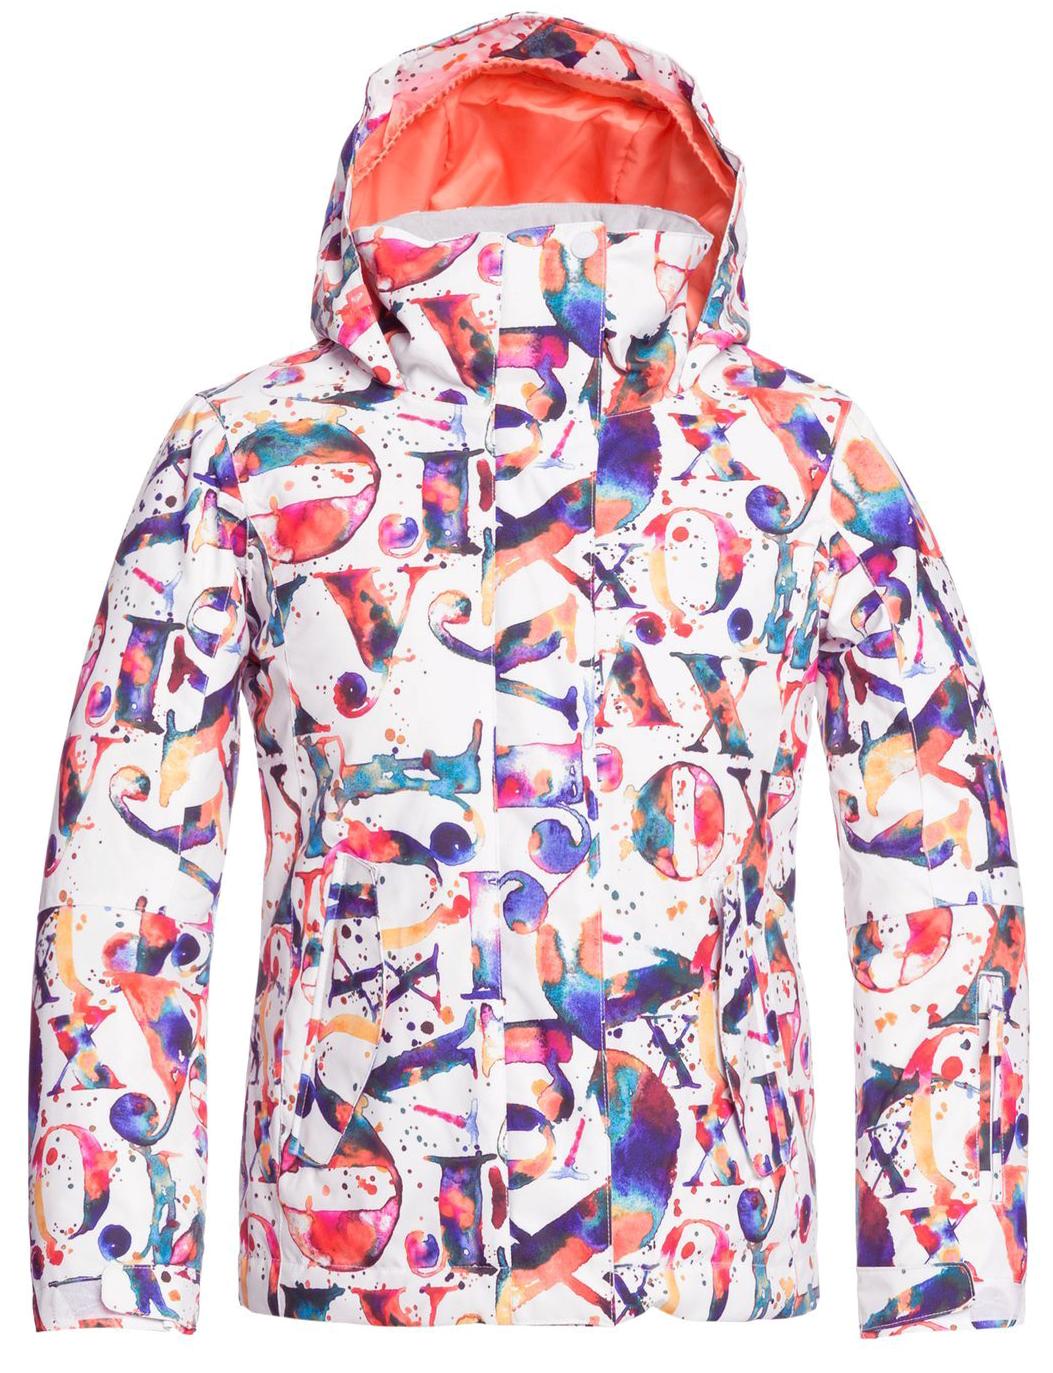 Куртка сноубордическая детская Roxy 2020-21 RX Jetty Bright white magic carpet